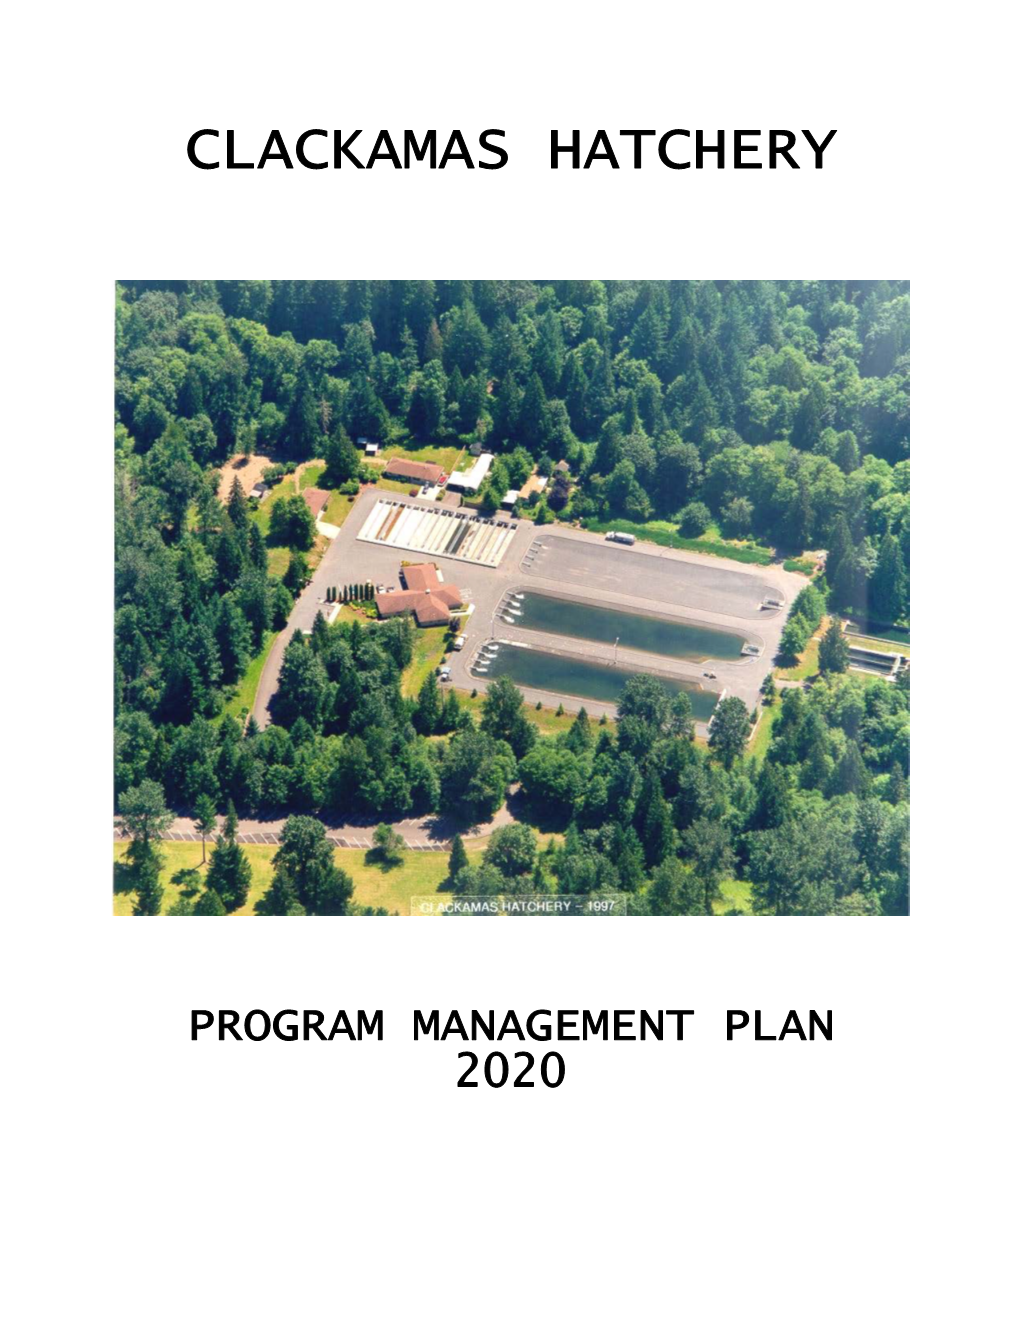 Clackamas Hatchery